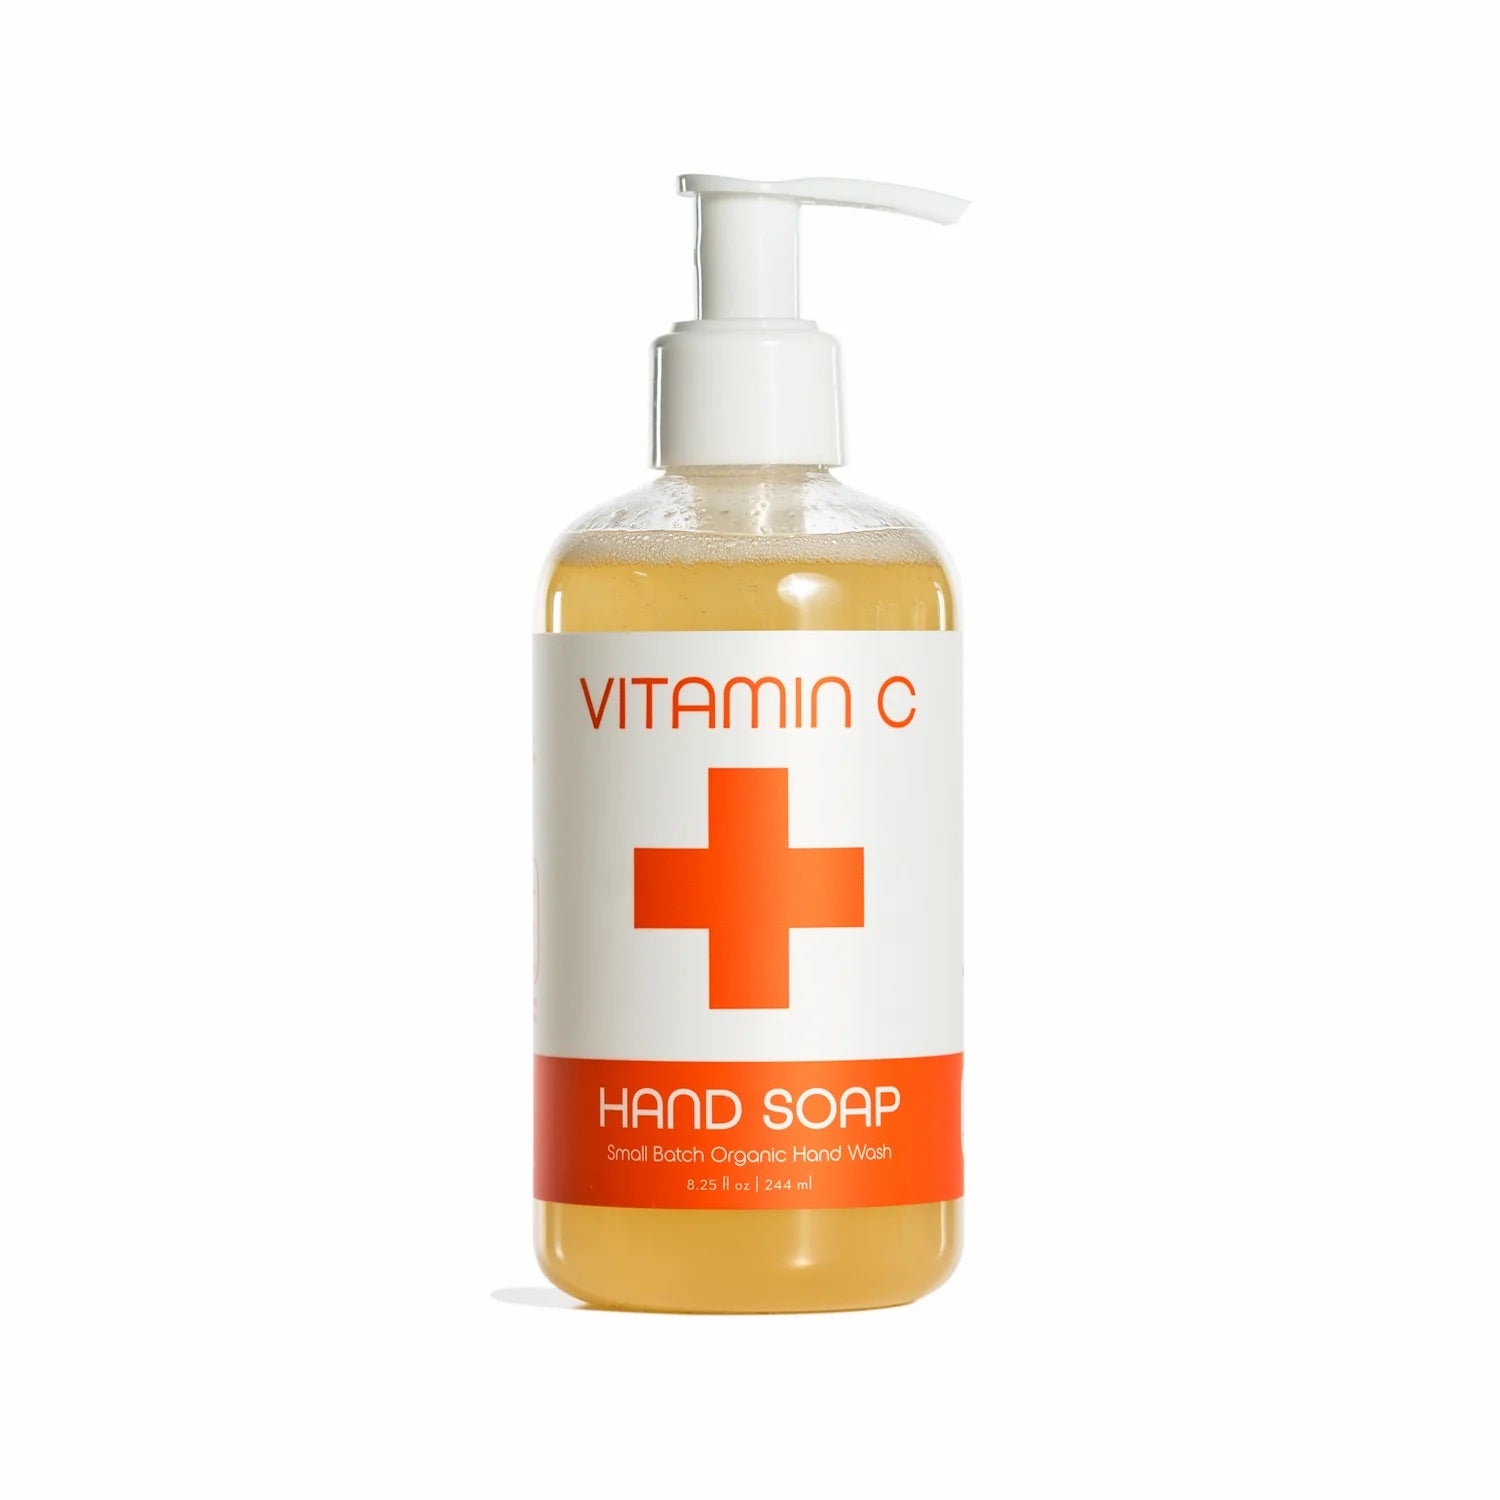 Nordic+Wellness Vitamin C Soap